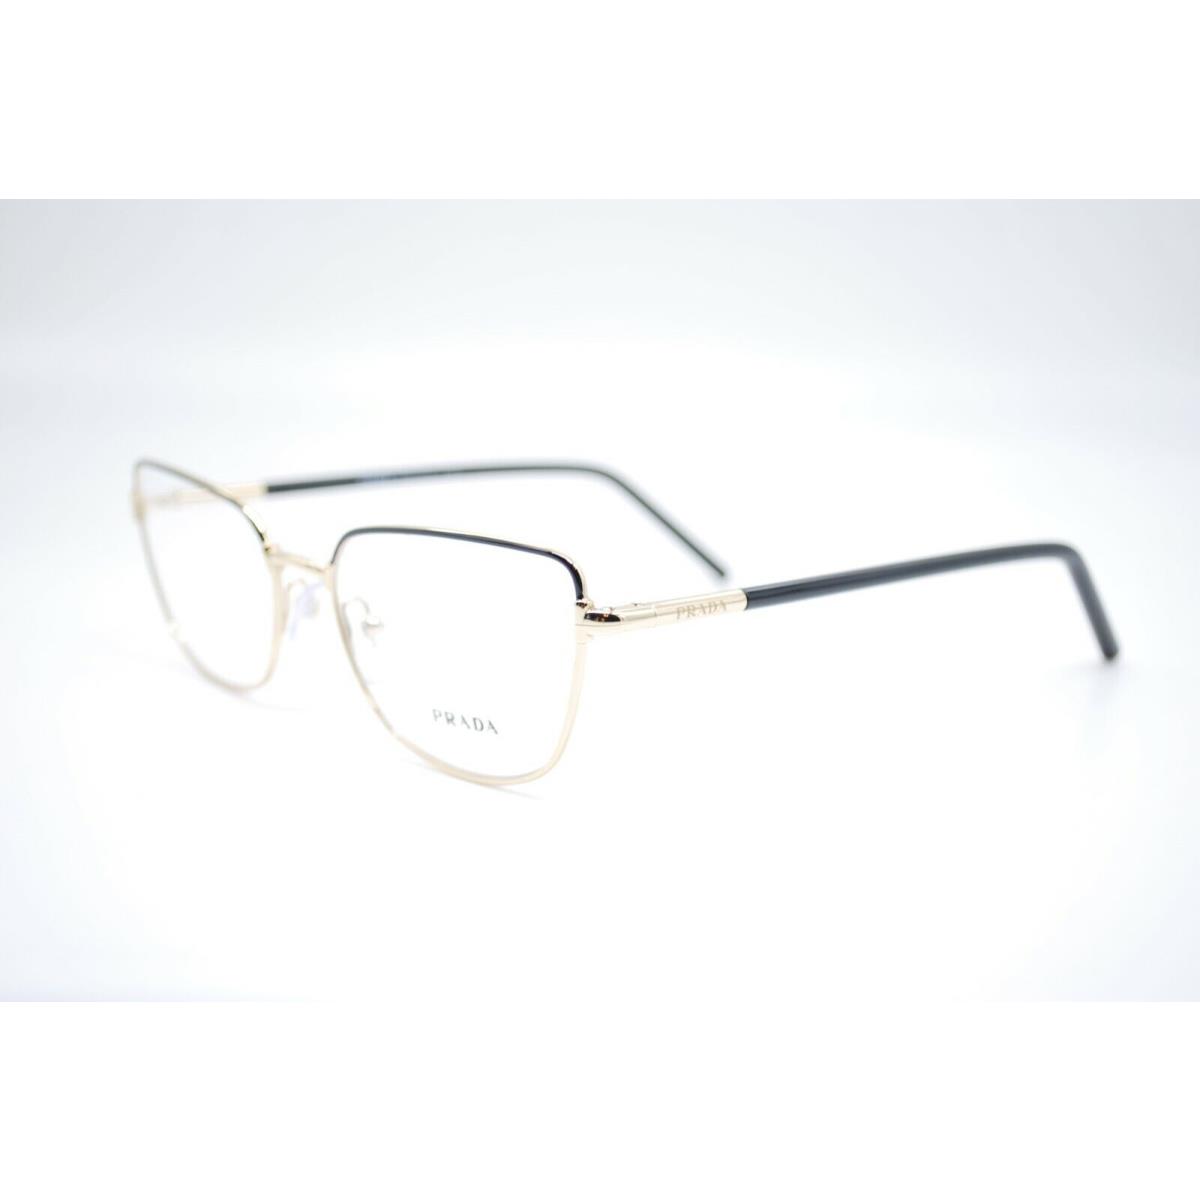 Prada eyeglasses VPR - Black Frame 0